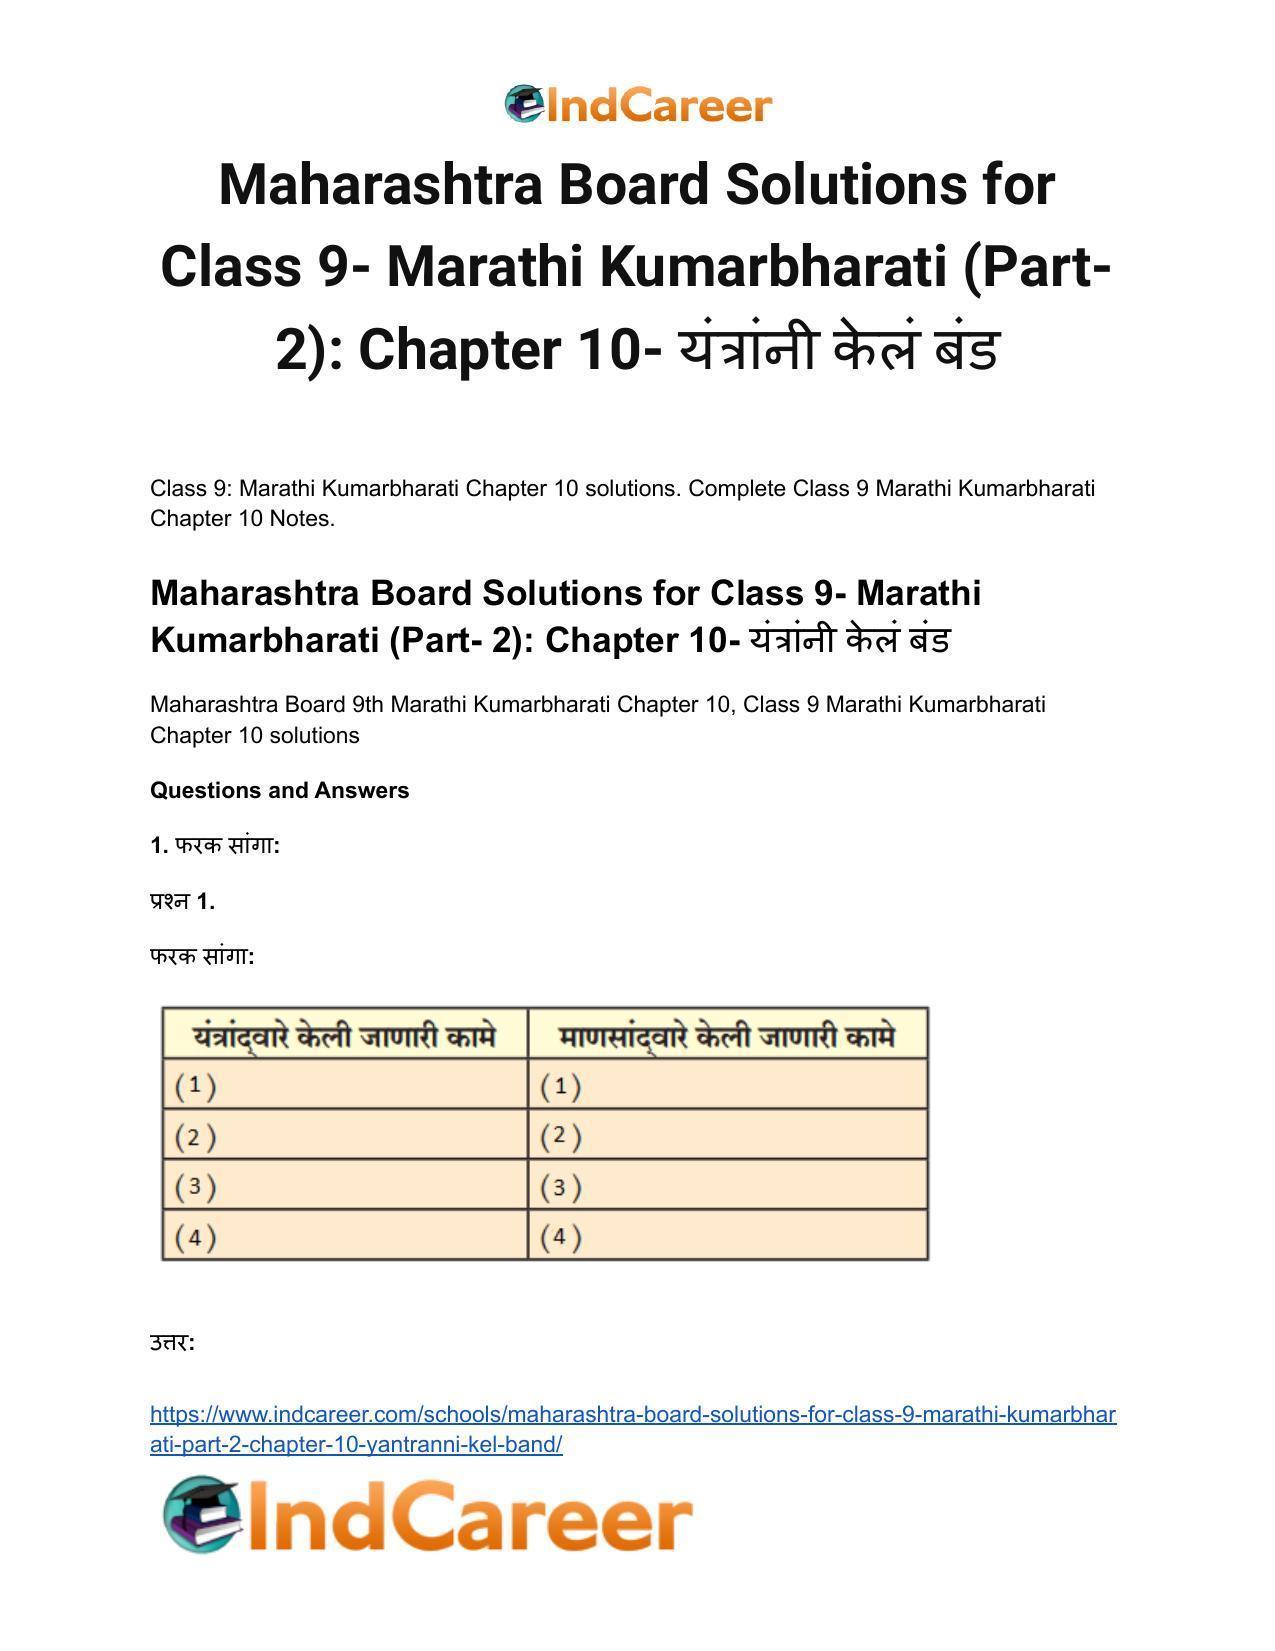 Maharashtra Board Solutions for Class 9- Marathi Kumarbharati (Part- 2): Chapter 10- यंत्रांनी केलं बंड - Page 2